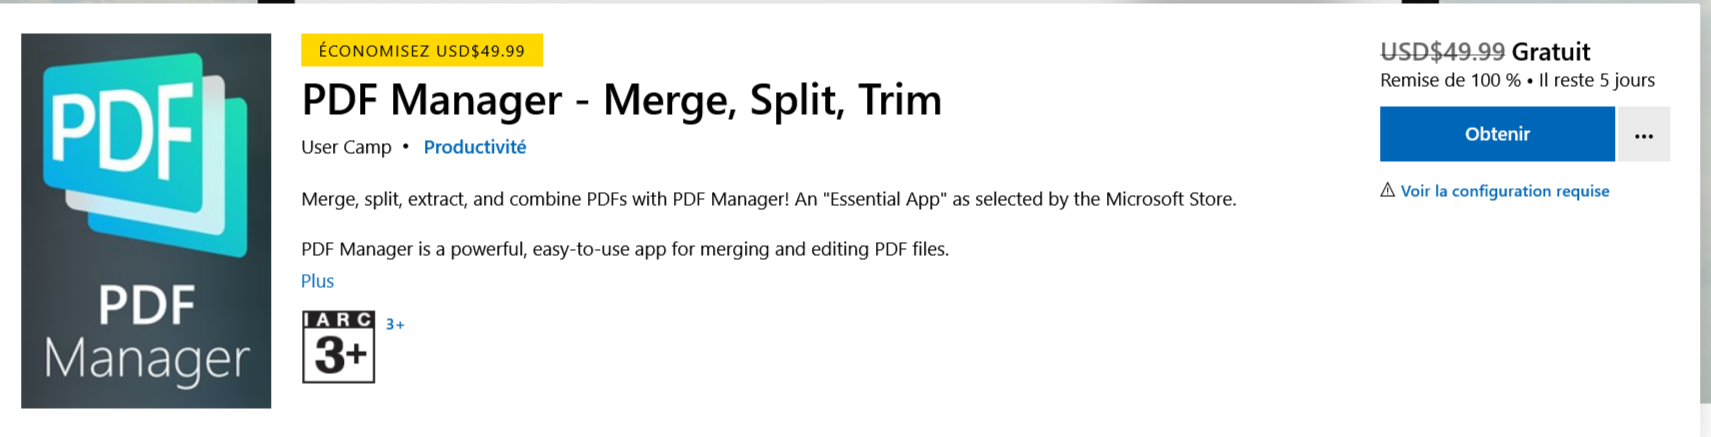 Recevoir-PDF-Manager-Merge-Split-Trim-Microsoft-Store-fr-BI.png